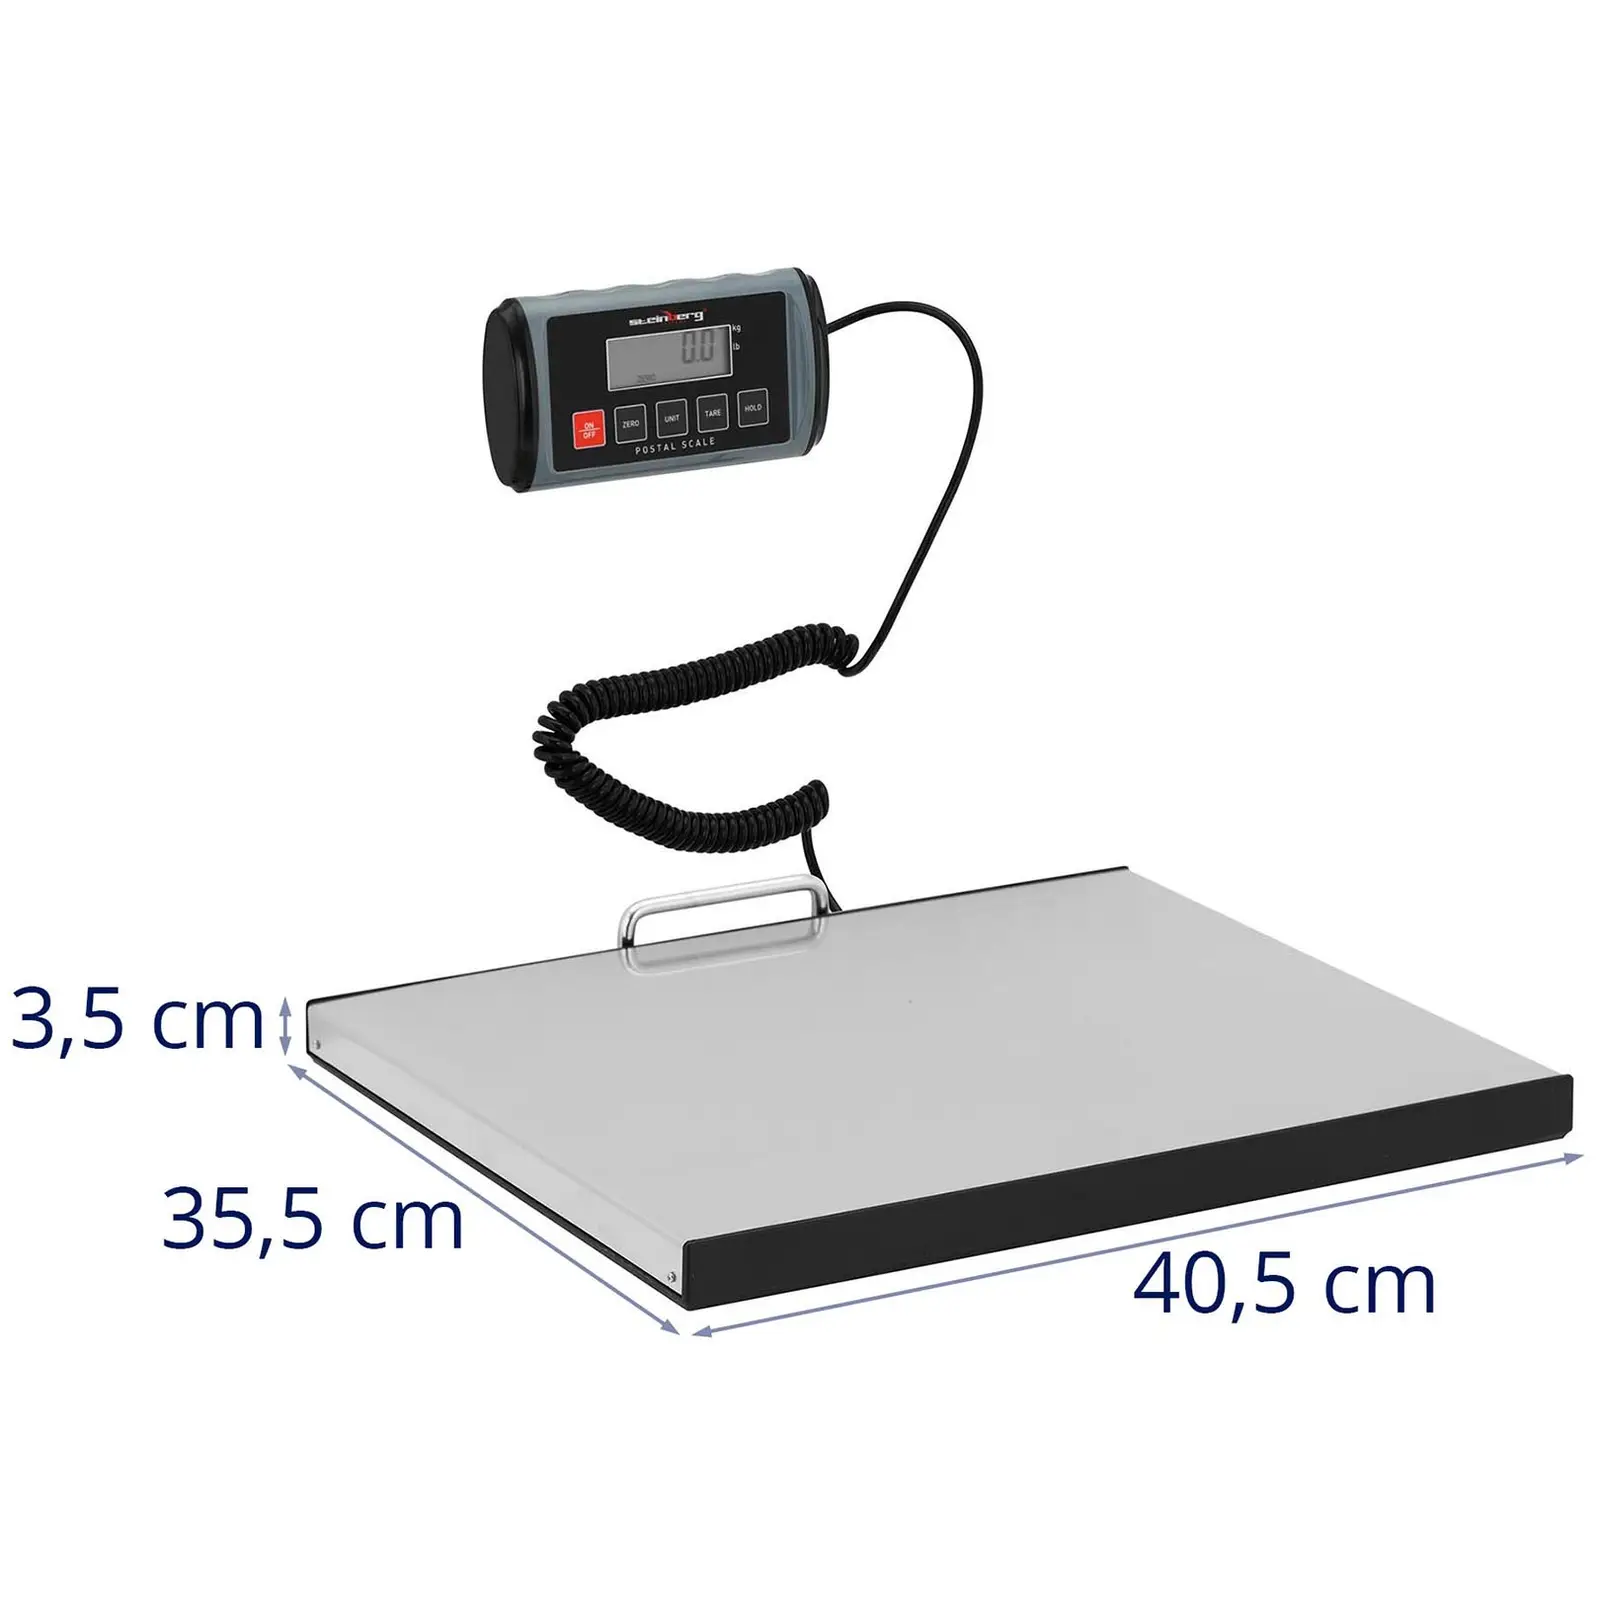 Pakettivaaka - 100 kg / 0,05 kg - 35,5 x 40,5 cm - ulkoinen LCD-näyttö